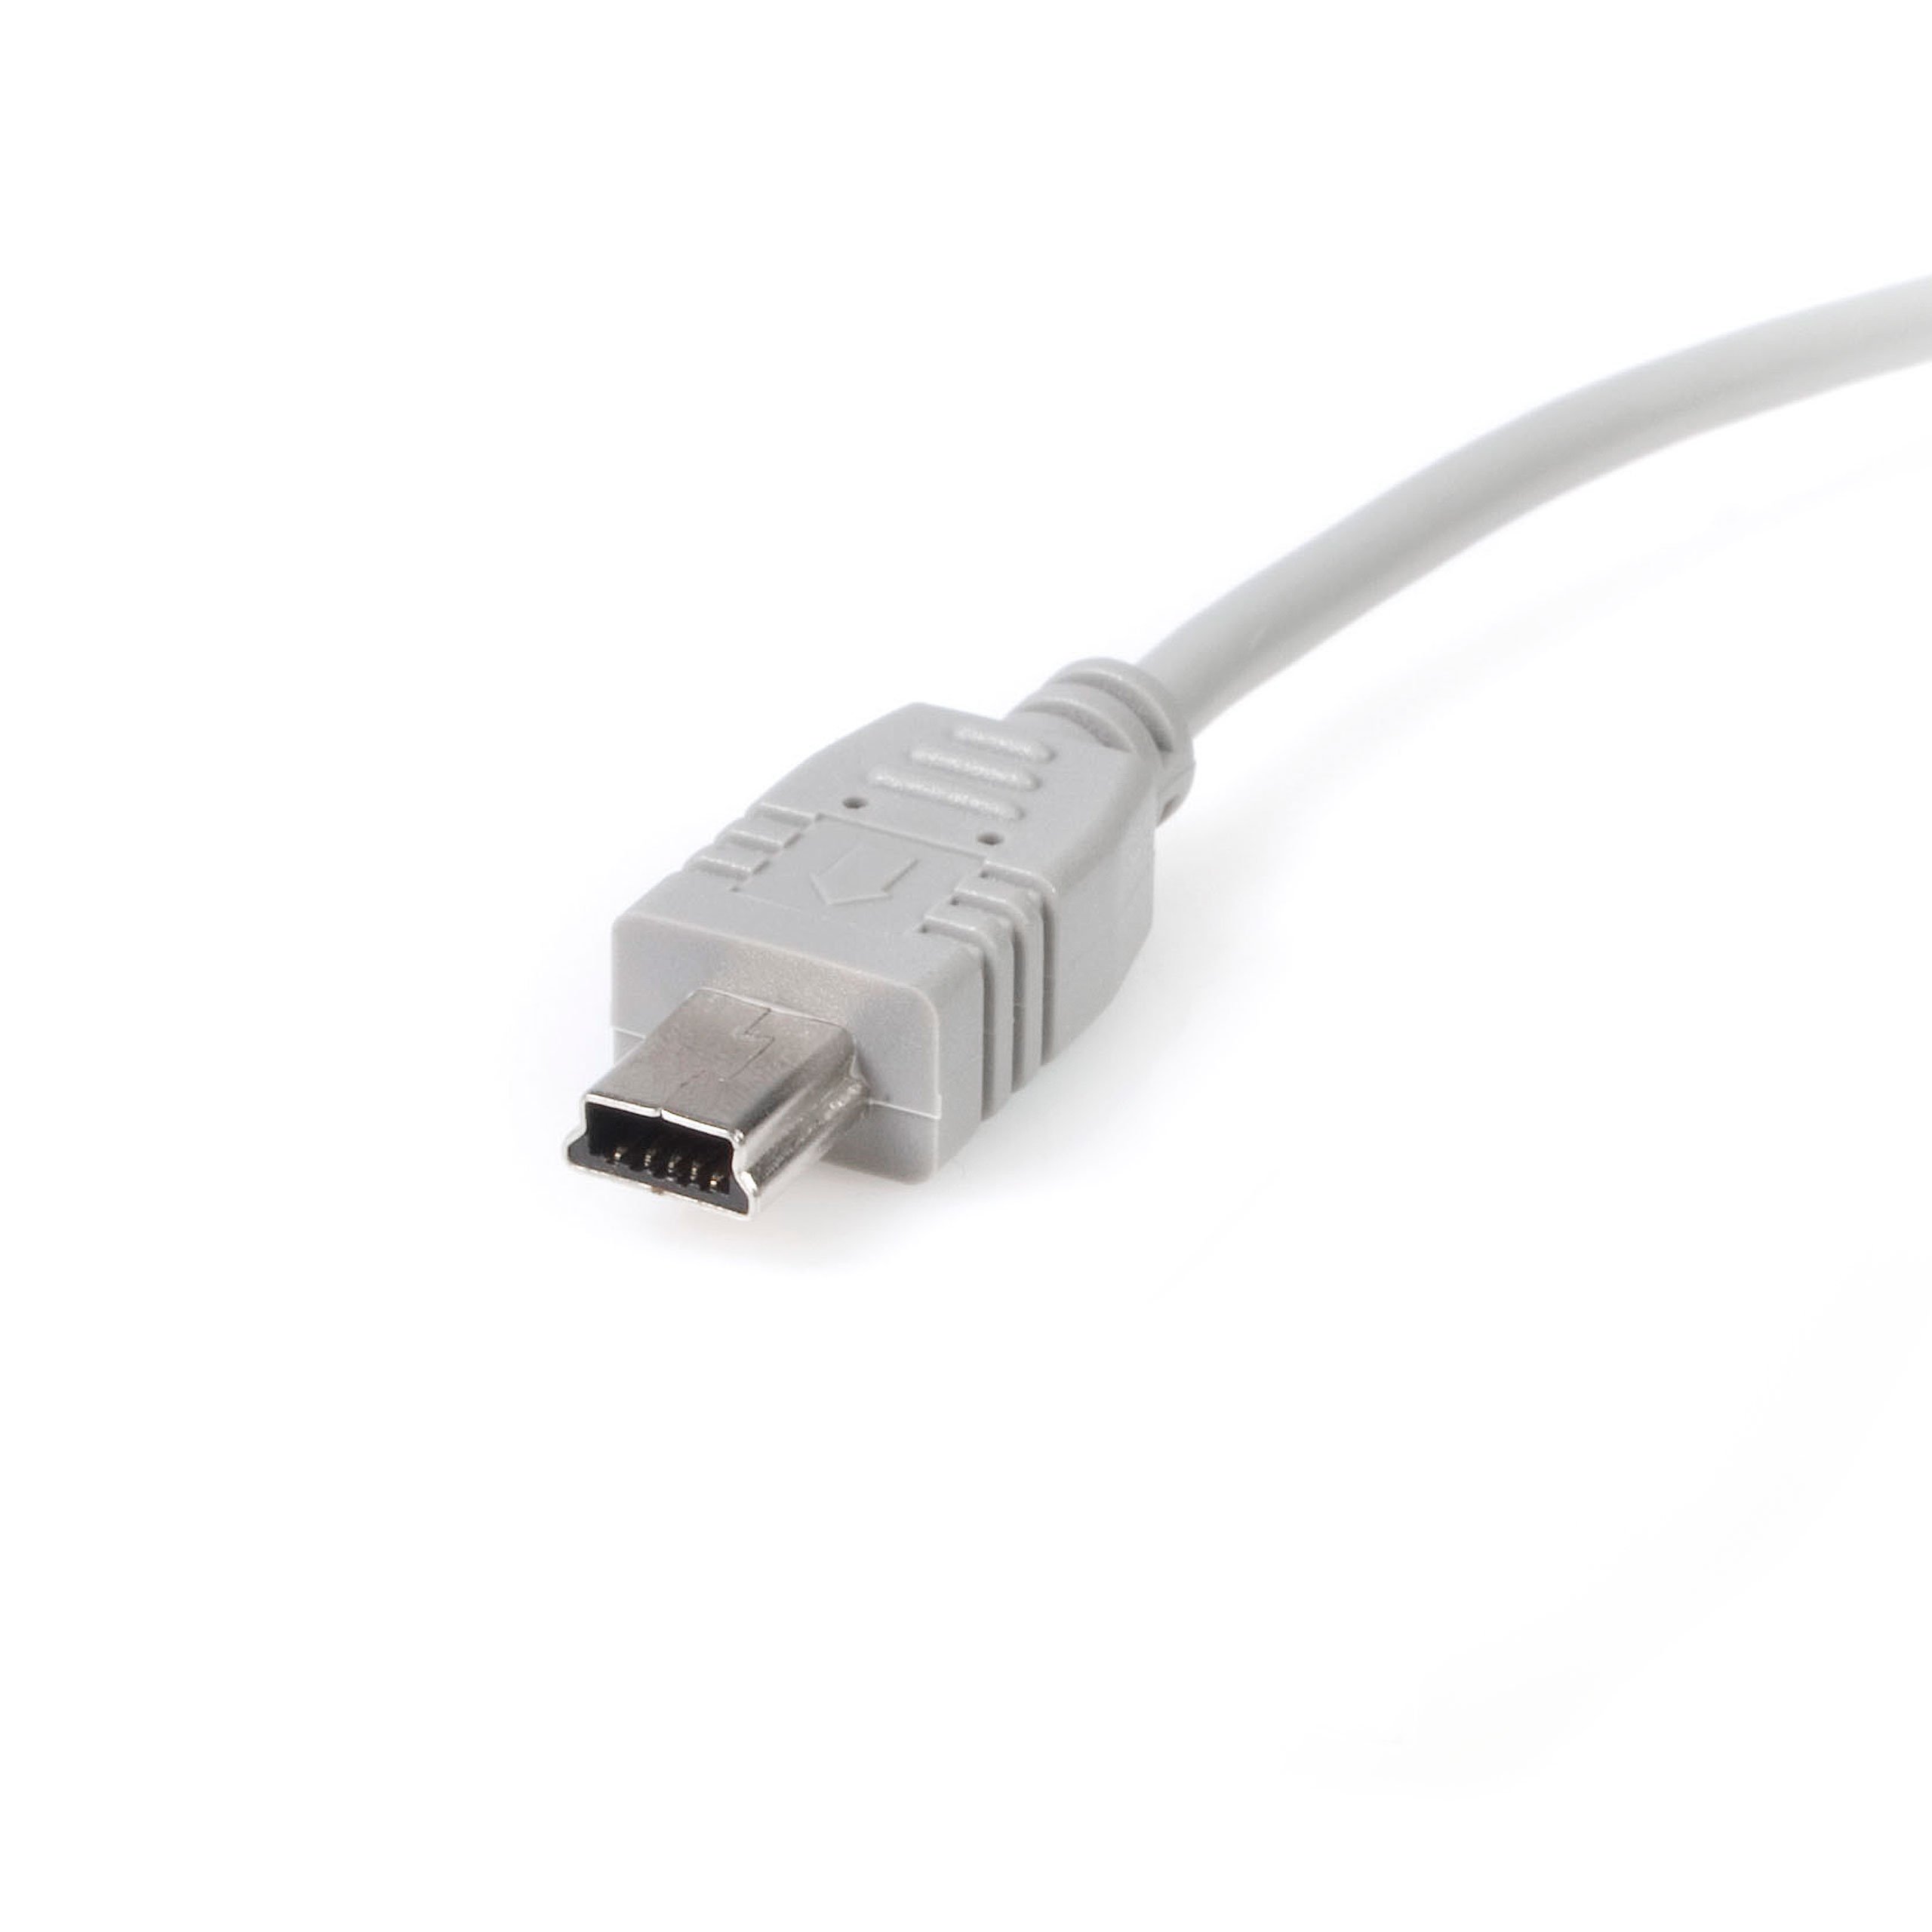 StarTech.com 3 ft. (0.9 m) USB to Mini USB Cable - USB 2.0 A to Mini B - Grey - Mini USB Cable (USB2HABM3)